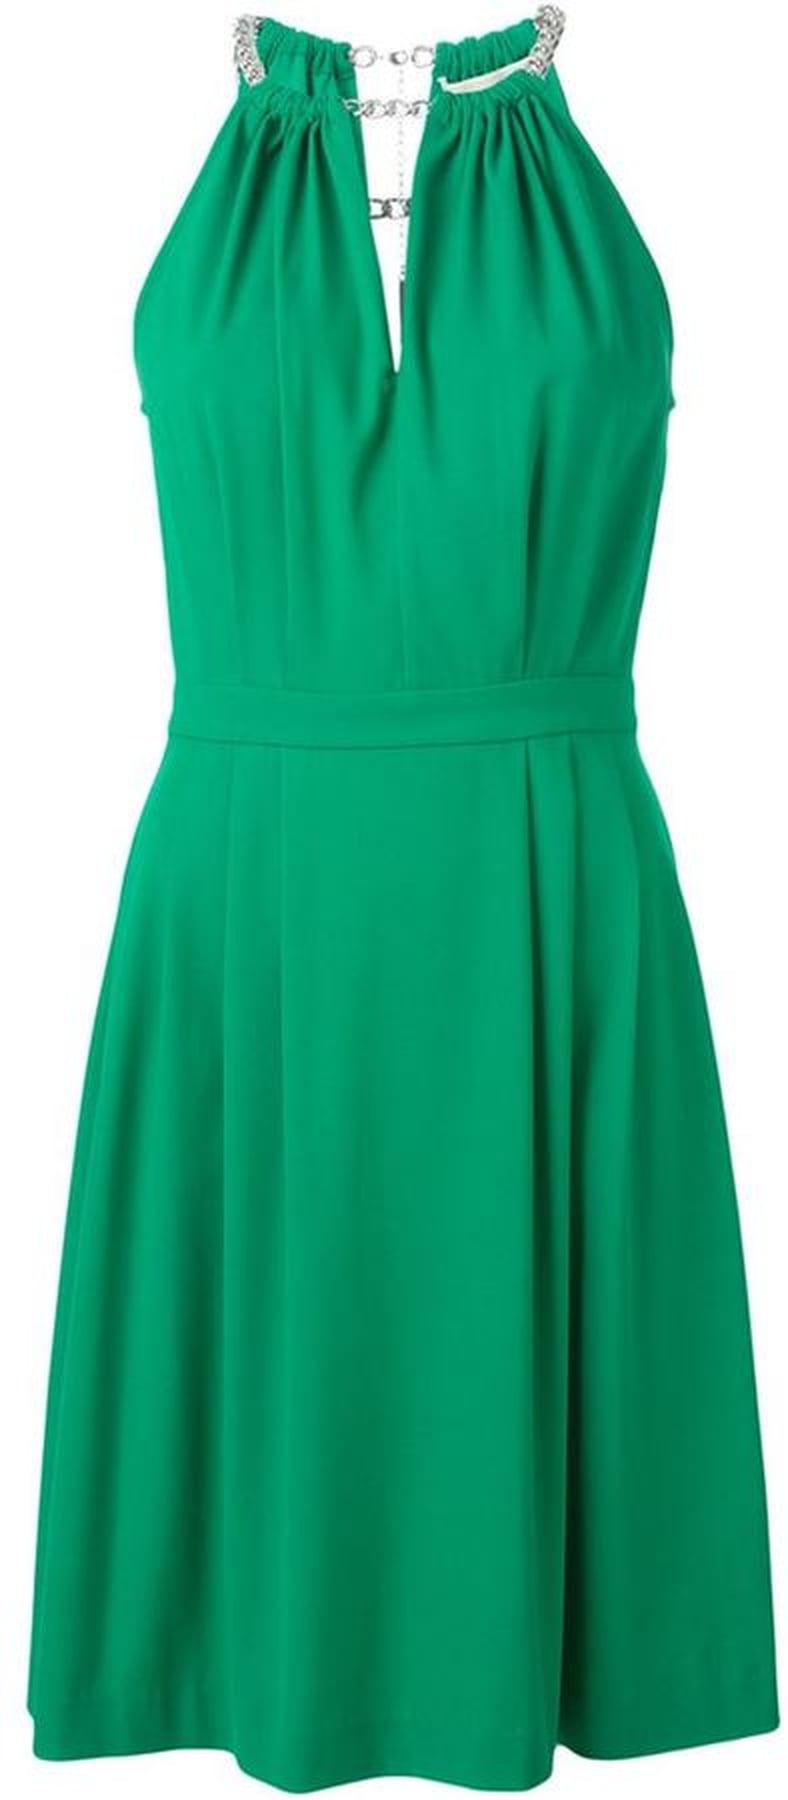 Amal Clooney Wearing Green Versace Dress | POPSUGAR Fashion